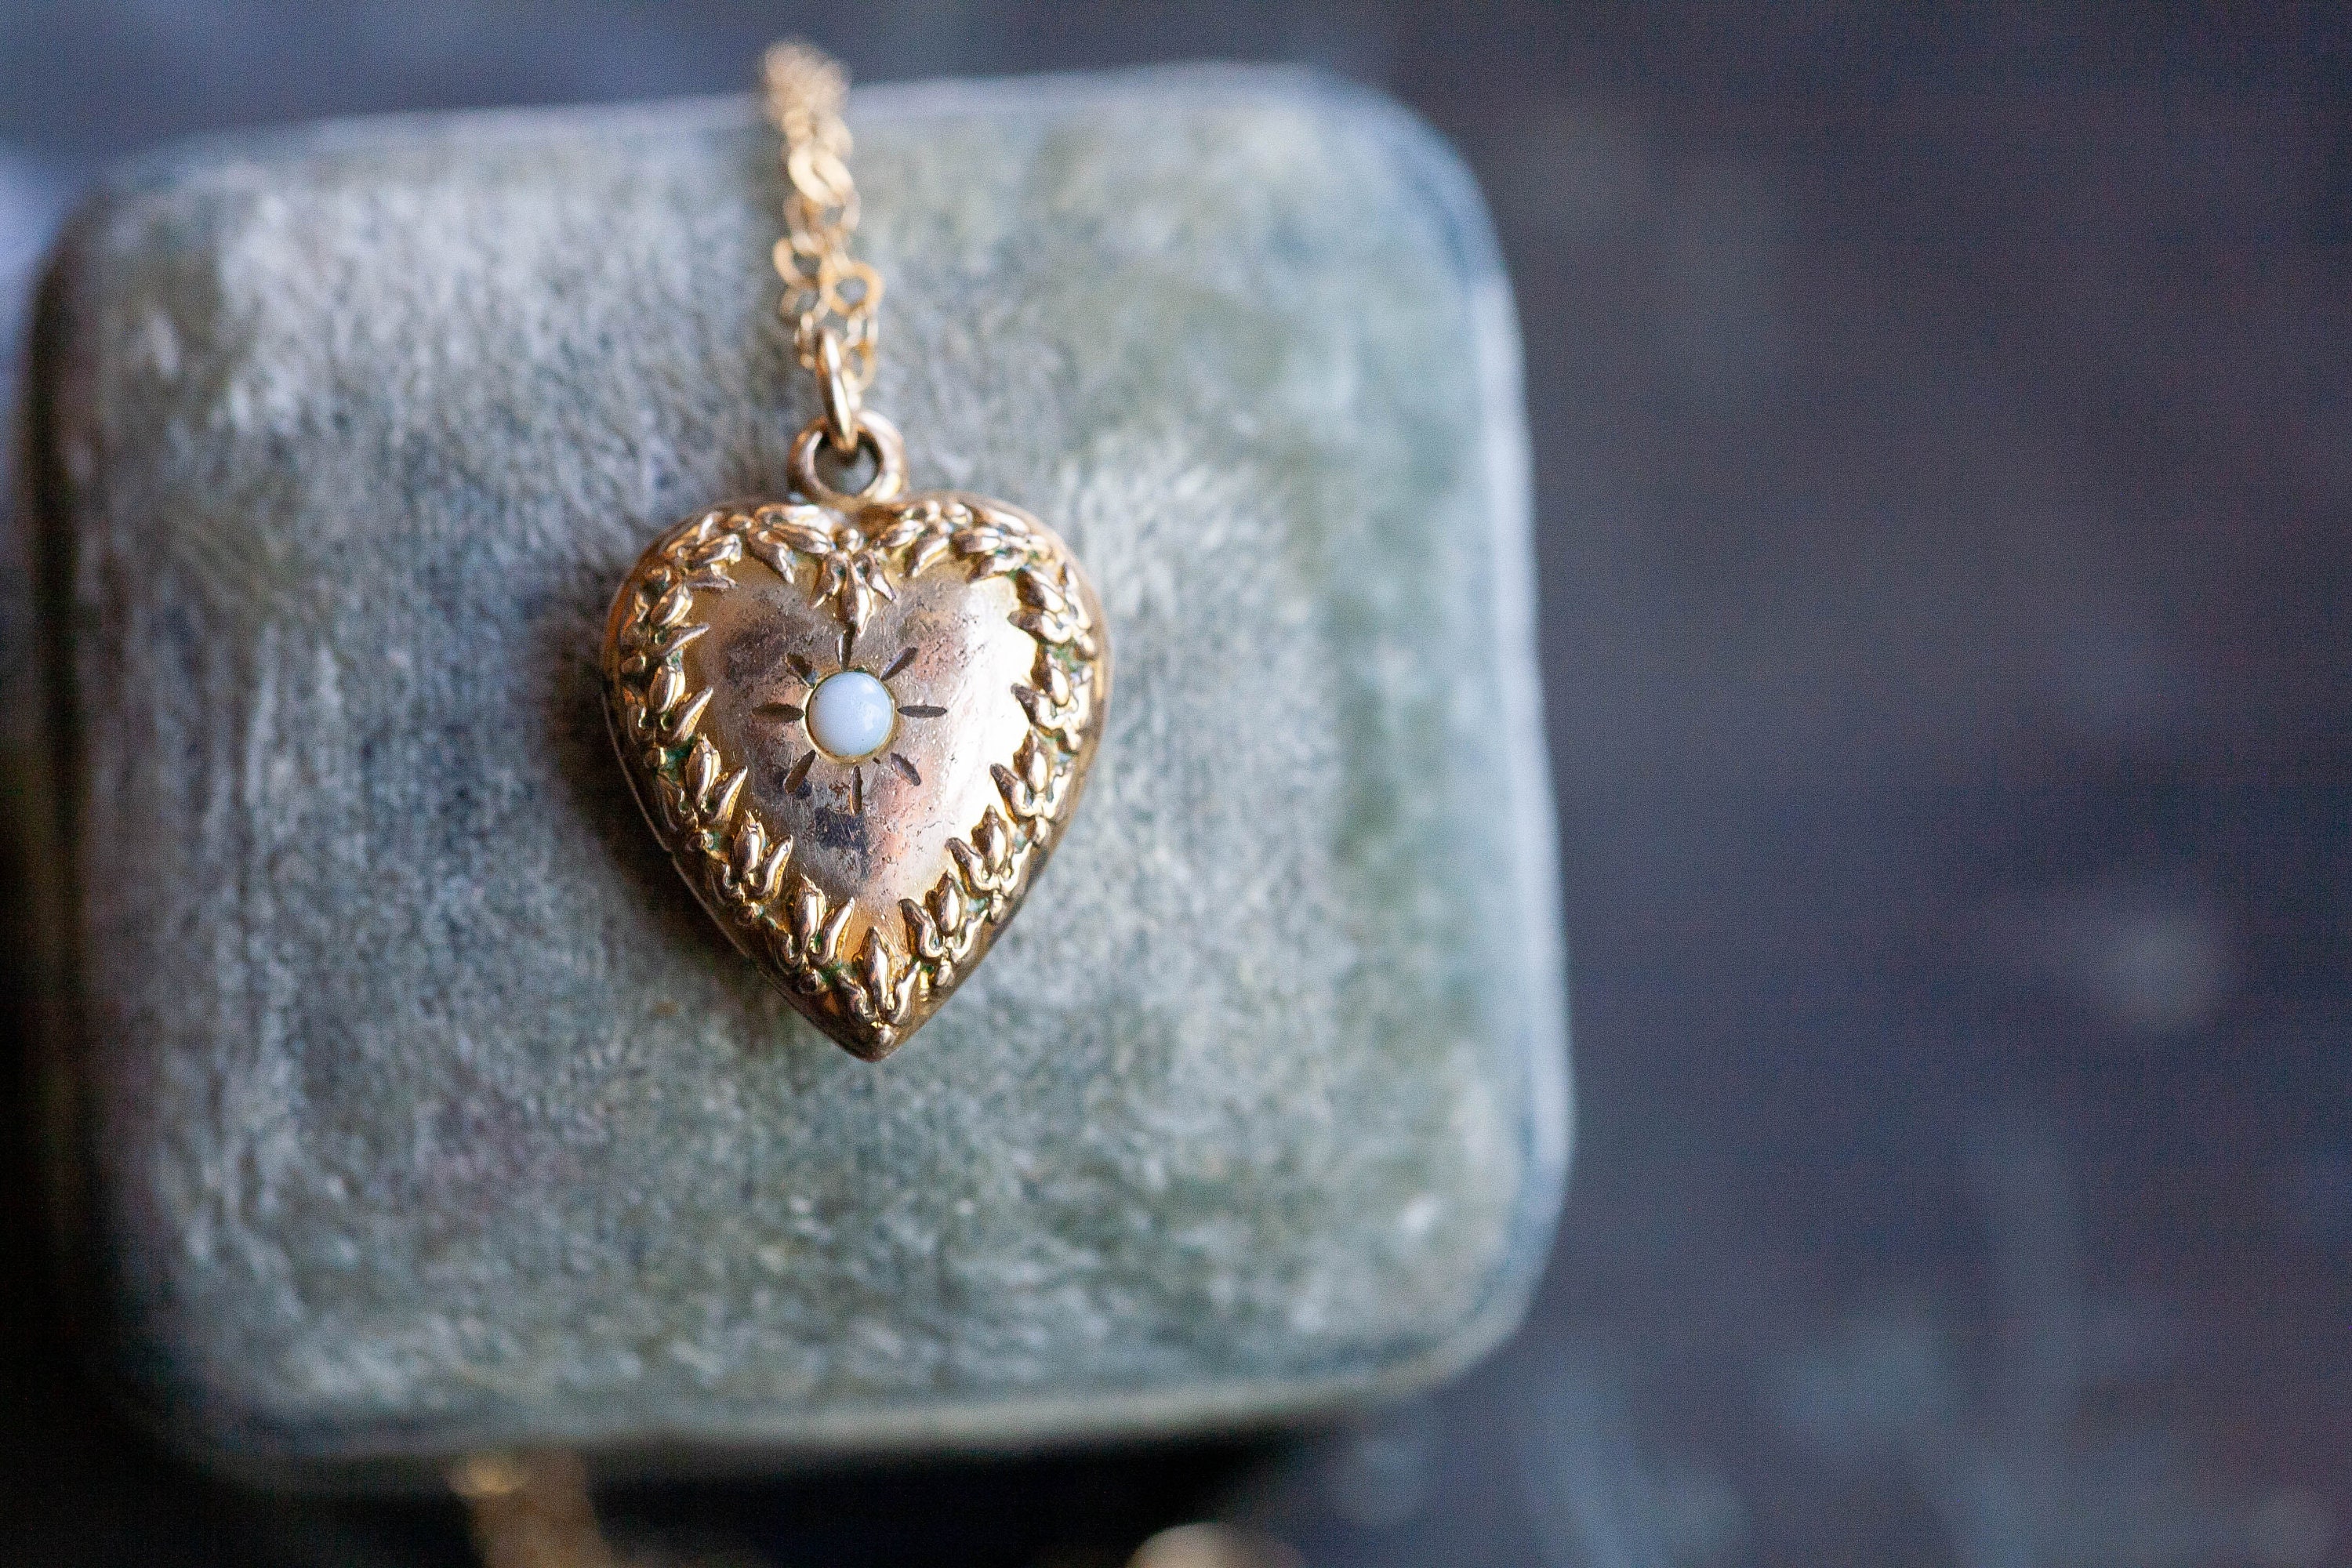 Puffy Hearts Charm Bracelet Sterling Silver Vintage Loaded – World